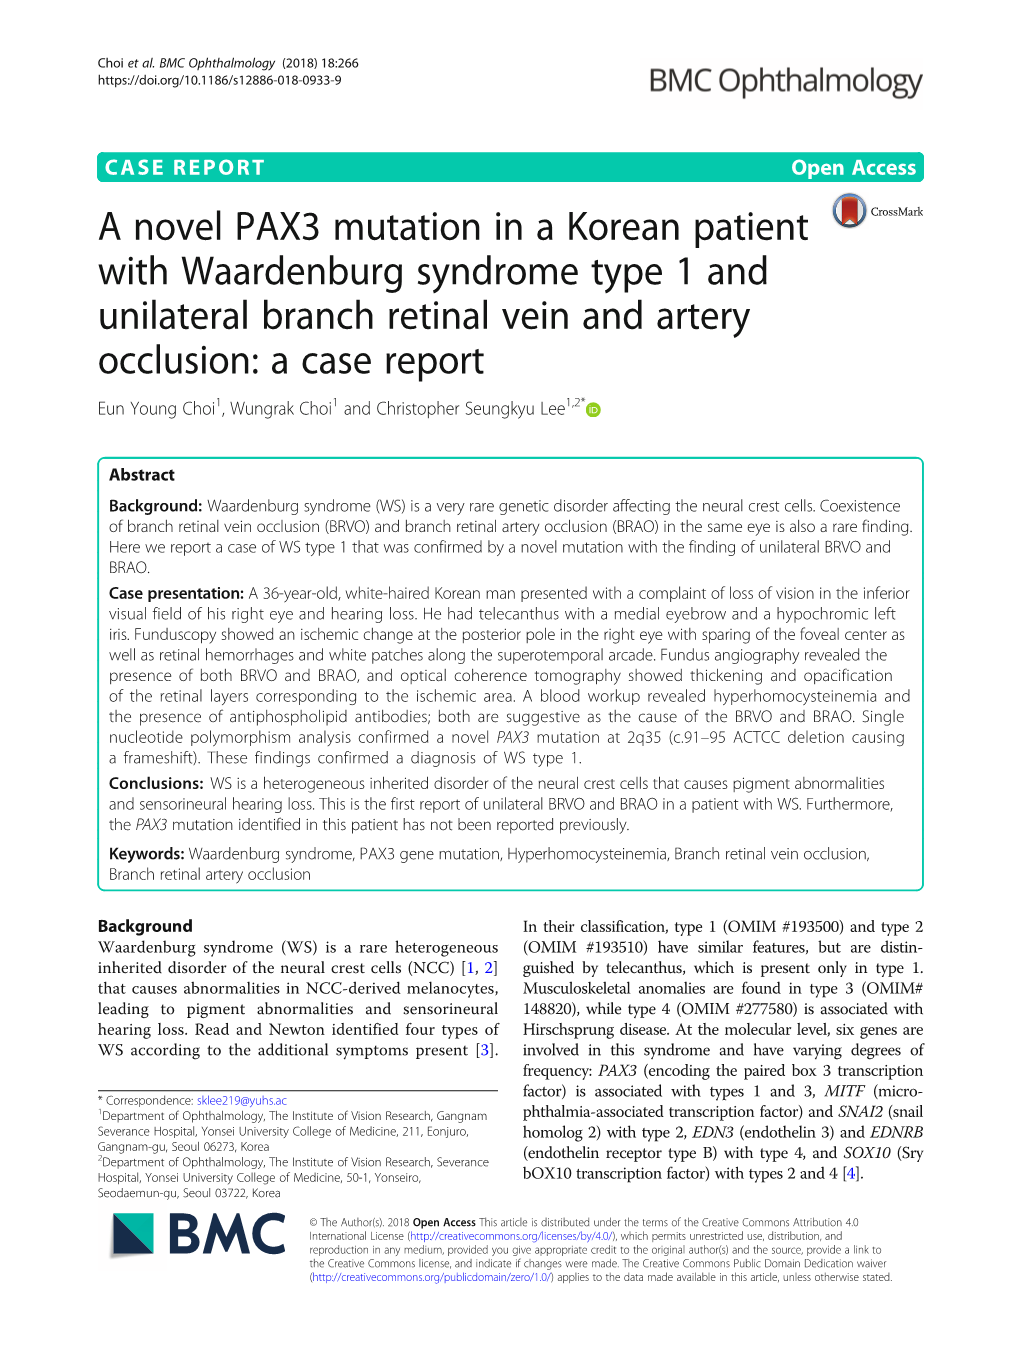 A Novel PAX3 Mutation in a Korean Patient with Waardenburg